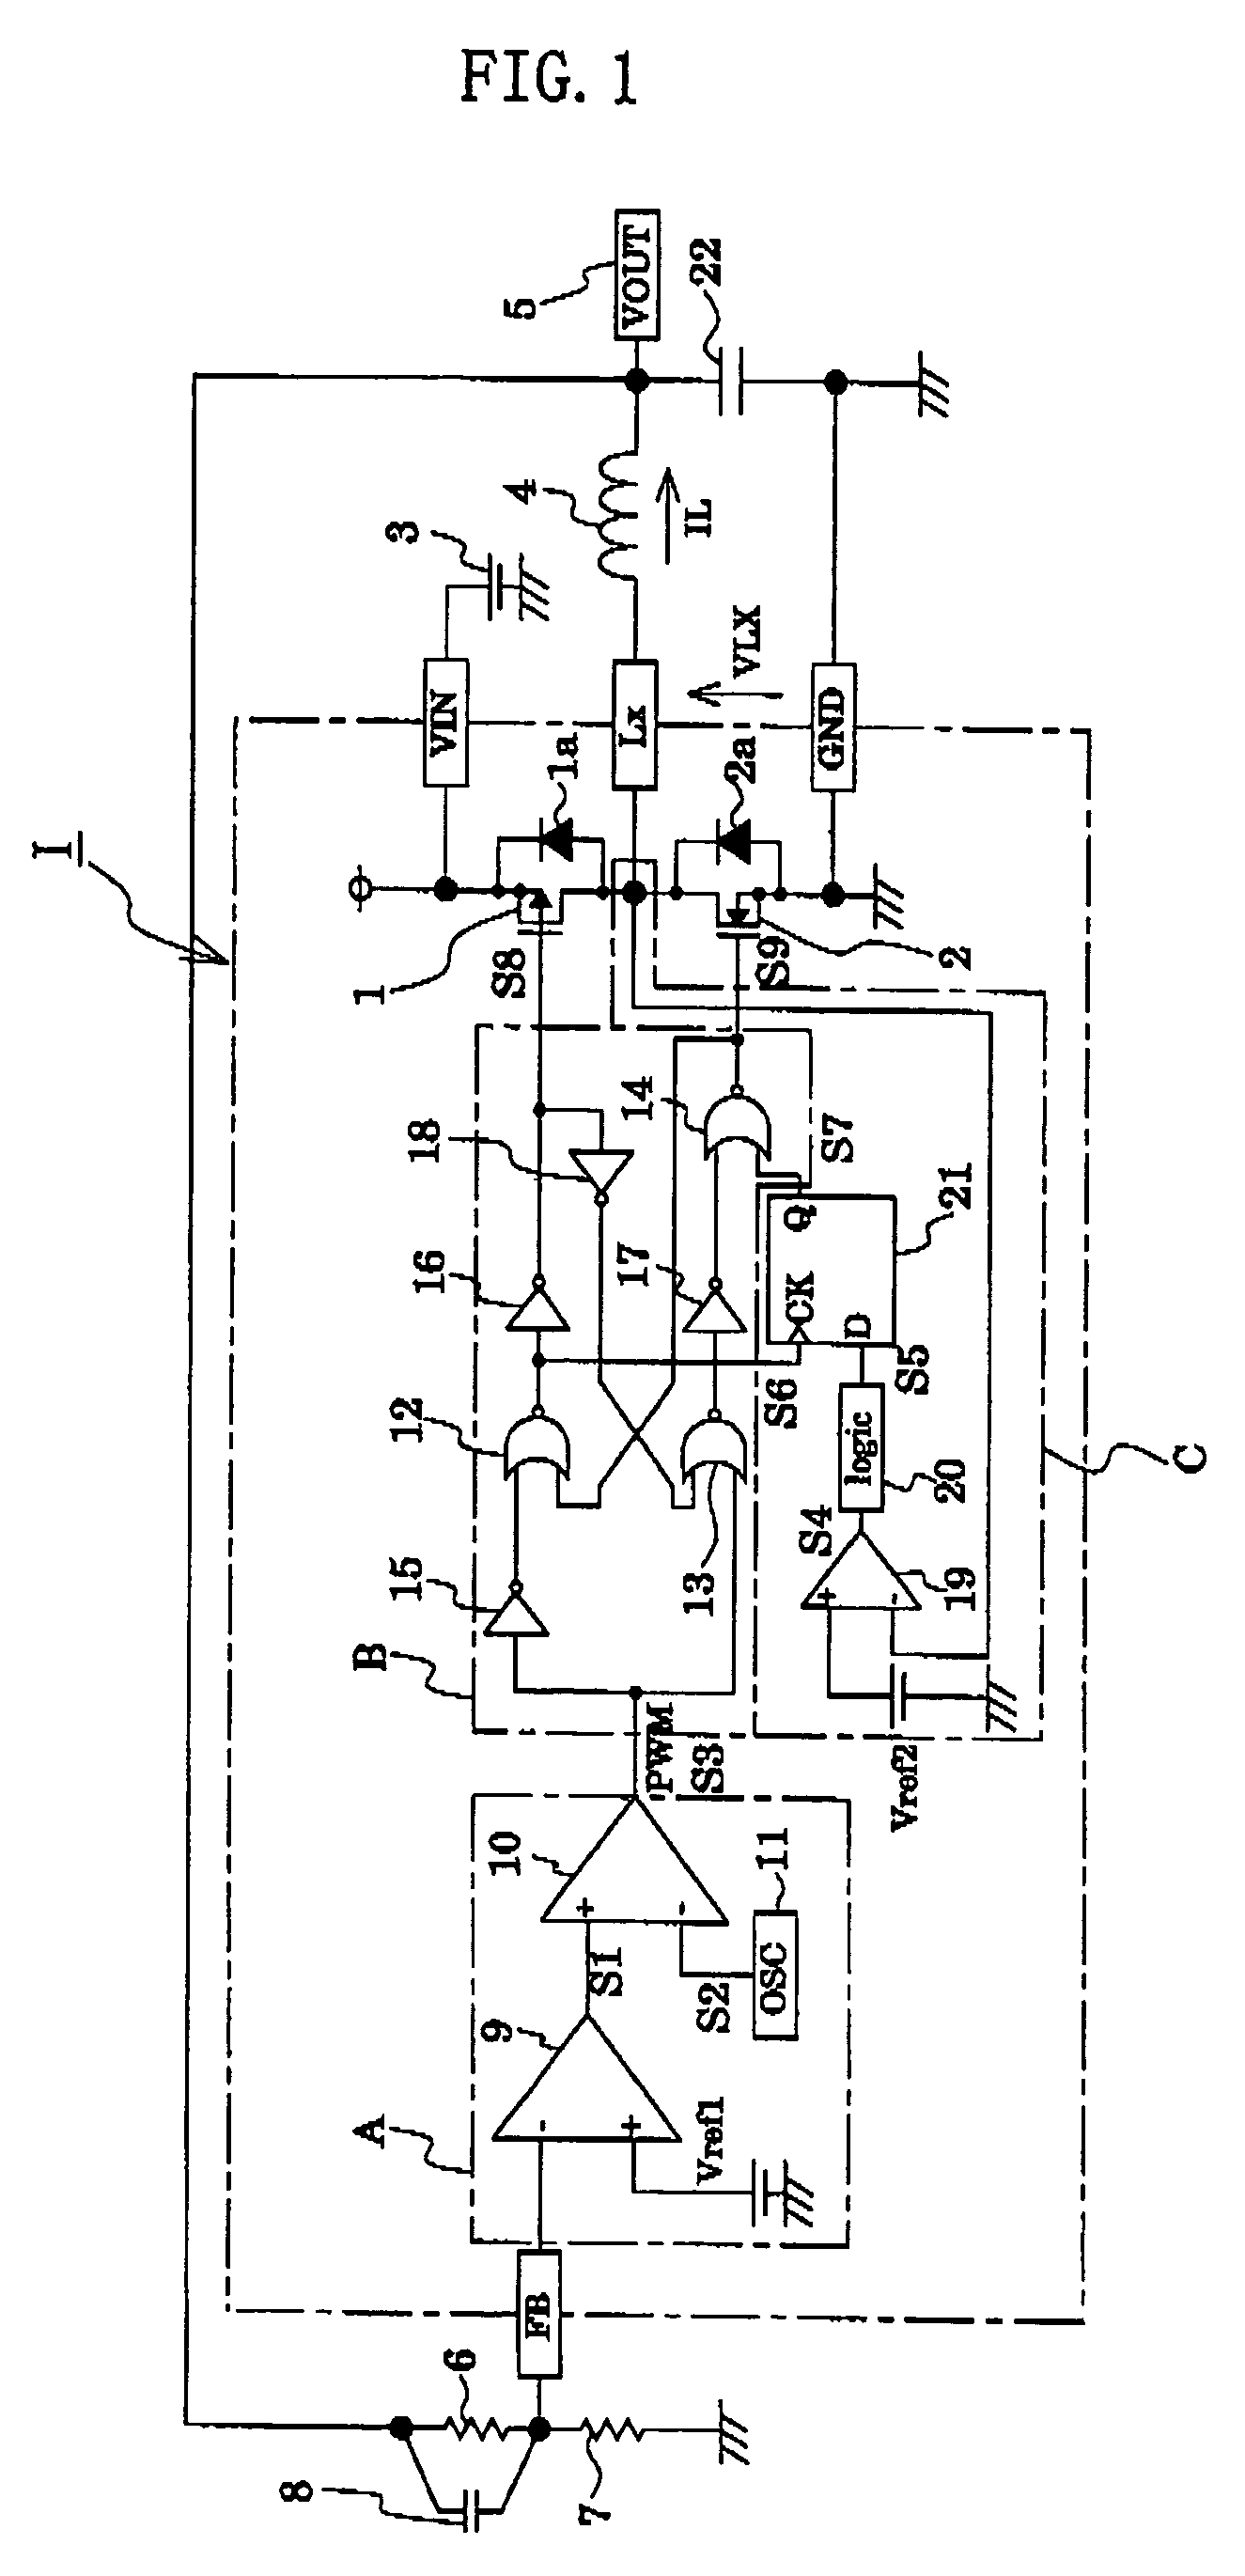 Control circuit for DC/DC converter